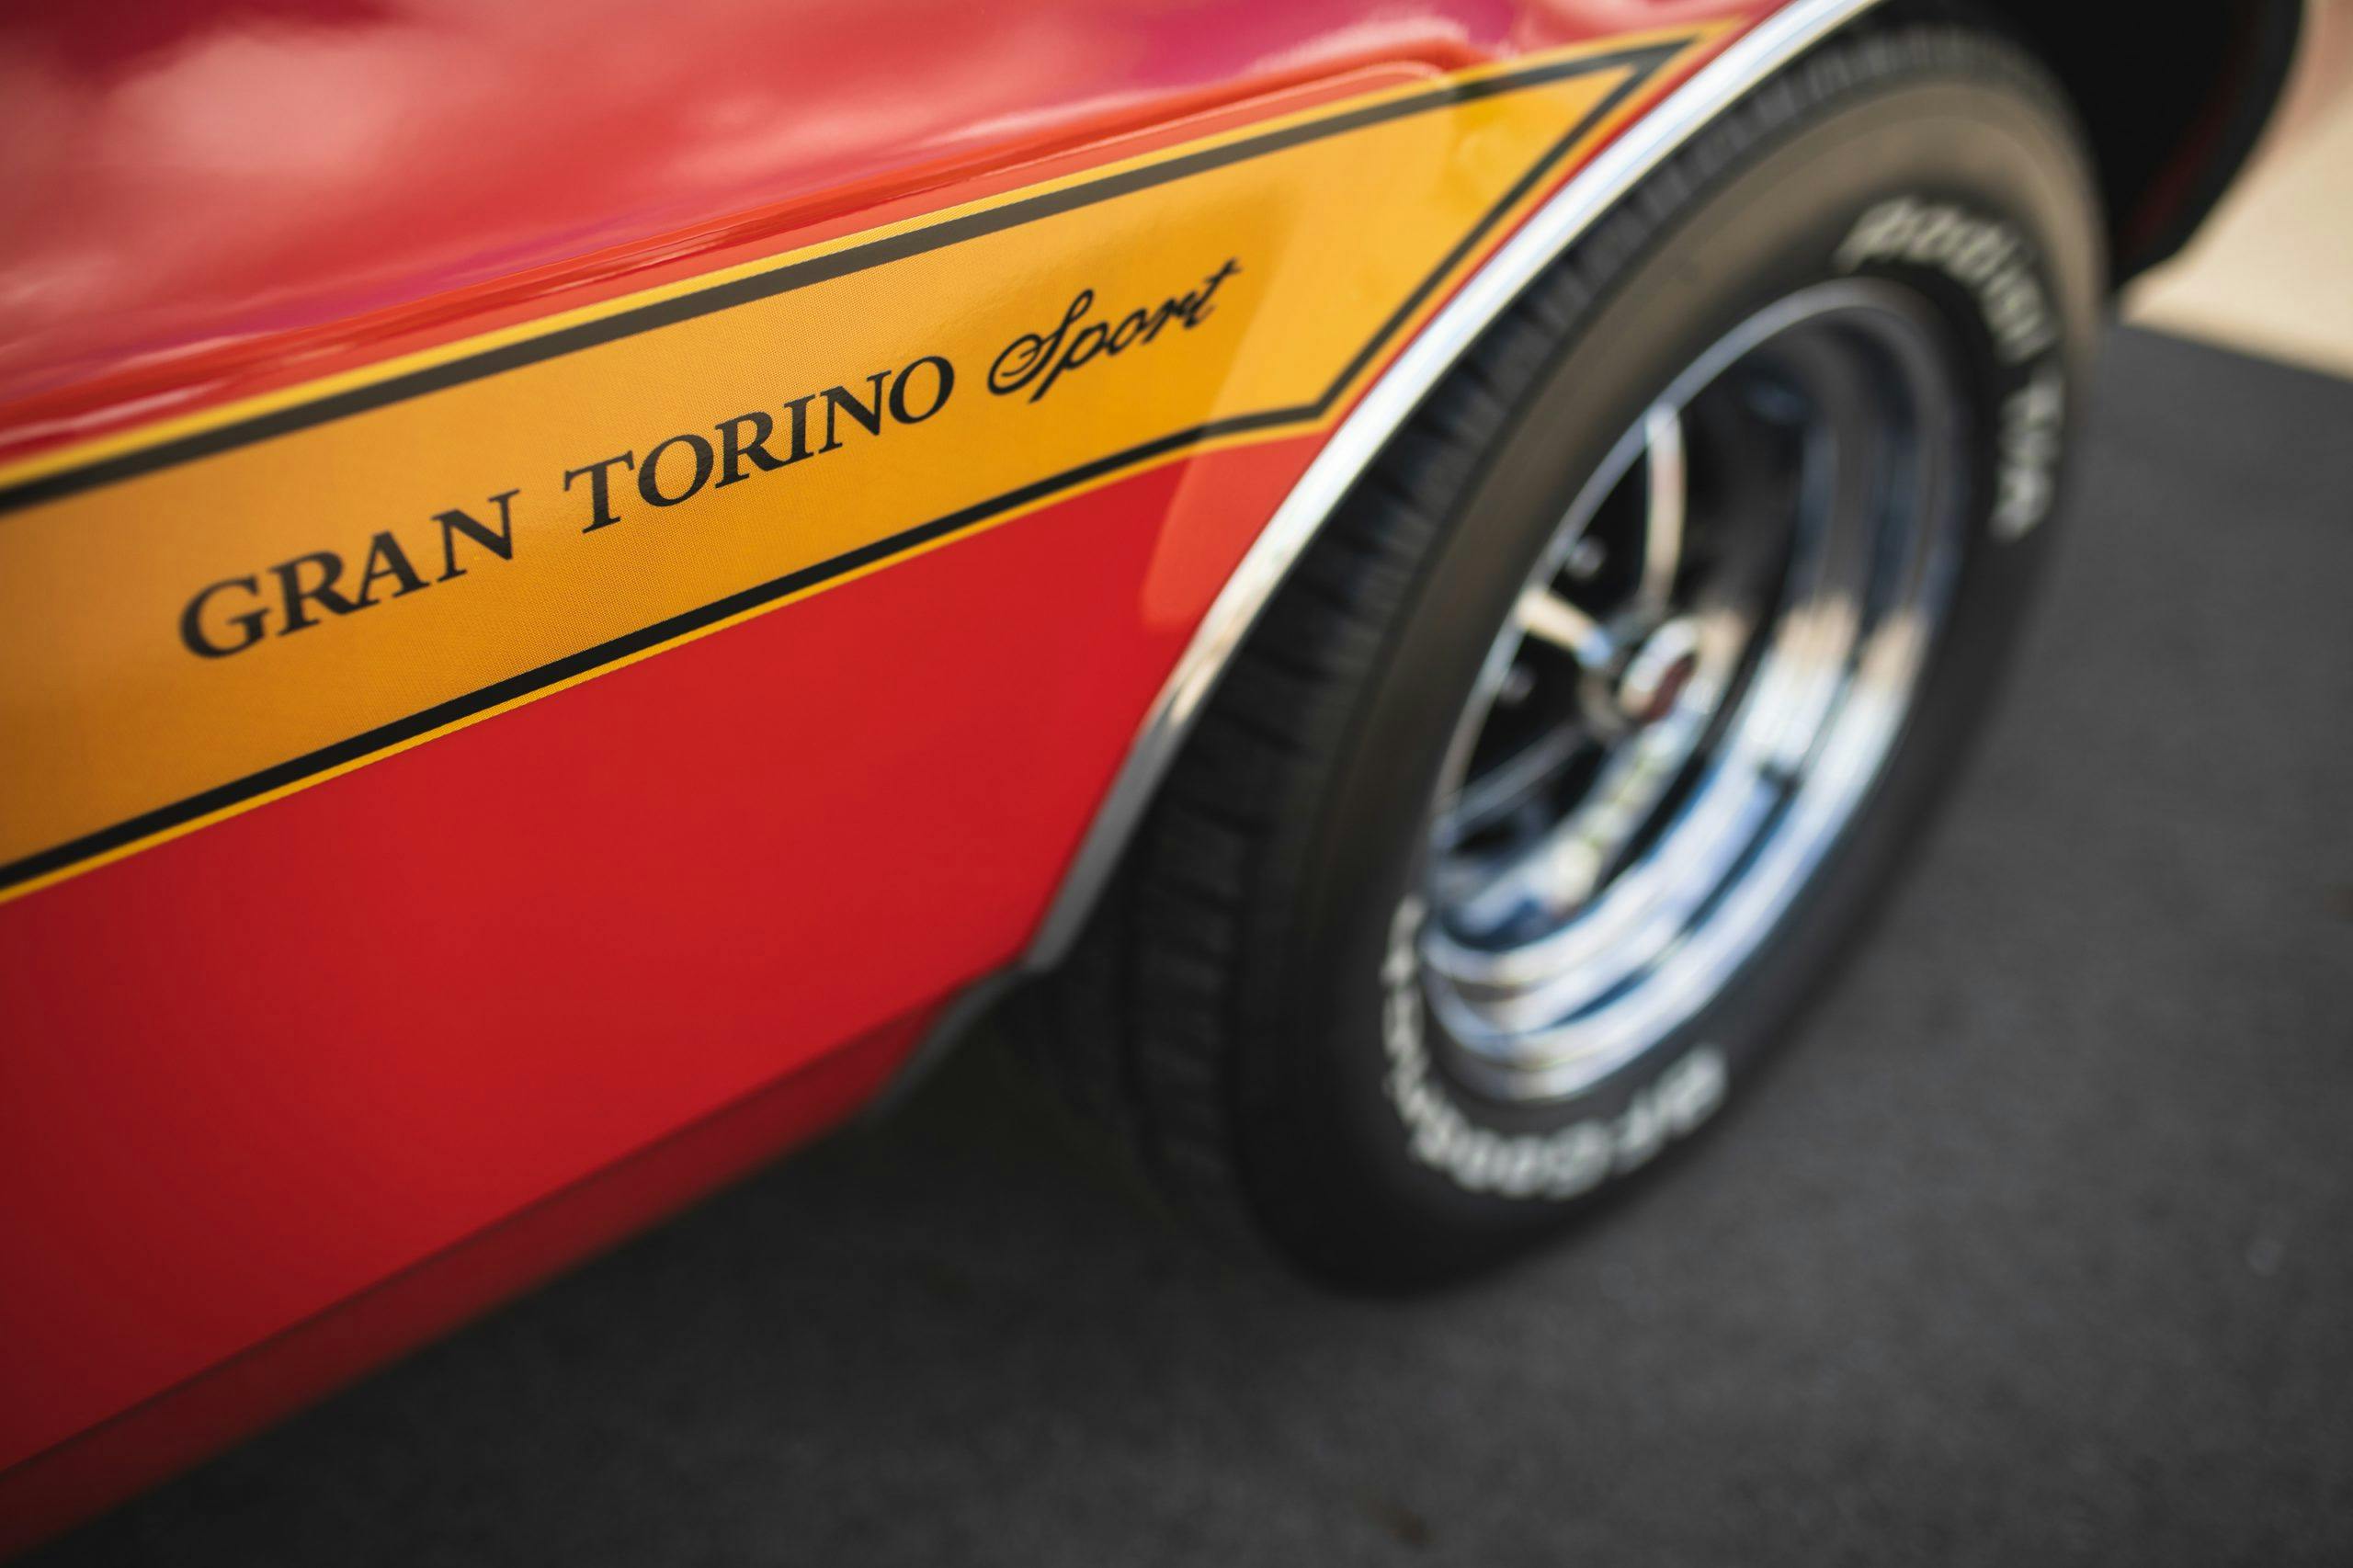 Ford Gran Torino PDC closing car show